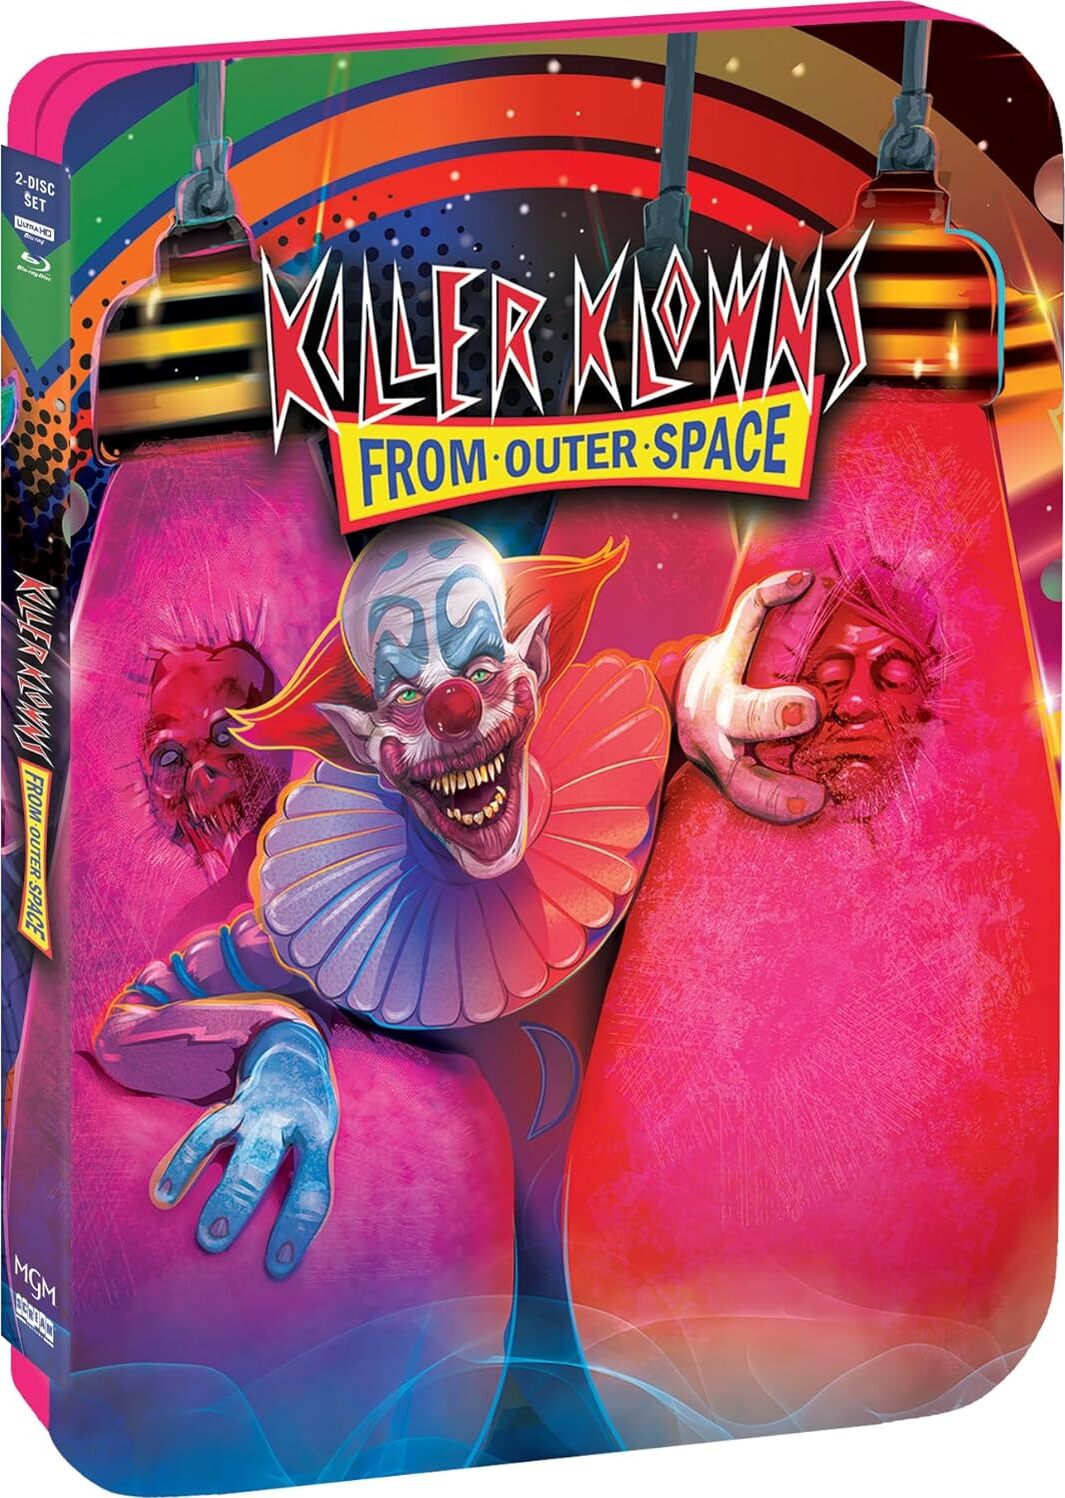 Killer Klowns From Outer Space 4K SteelBook